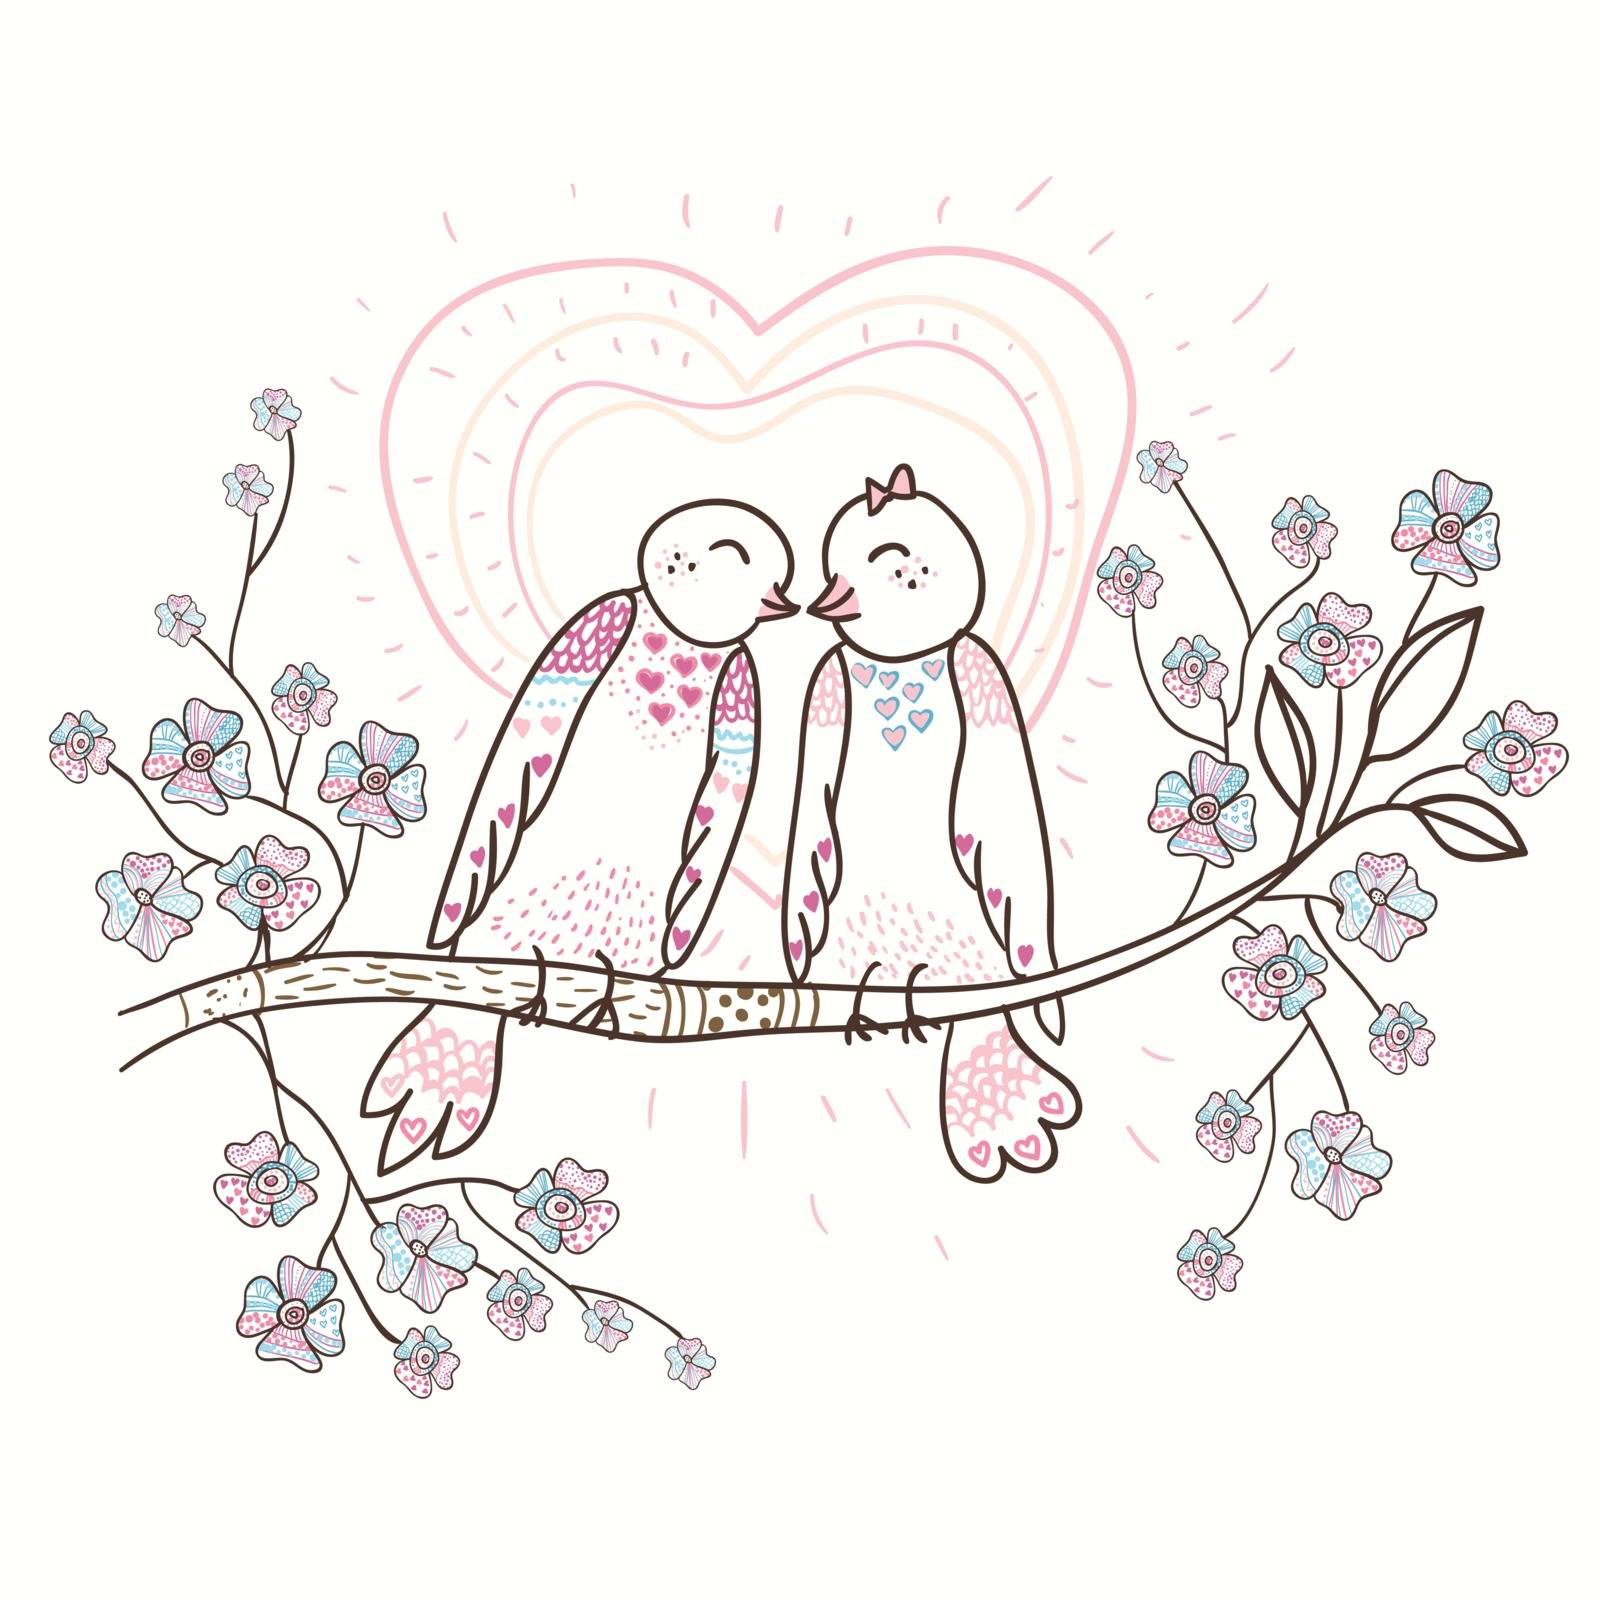 Illustration of Love Birds by lolya1988